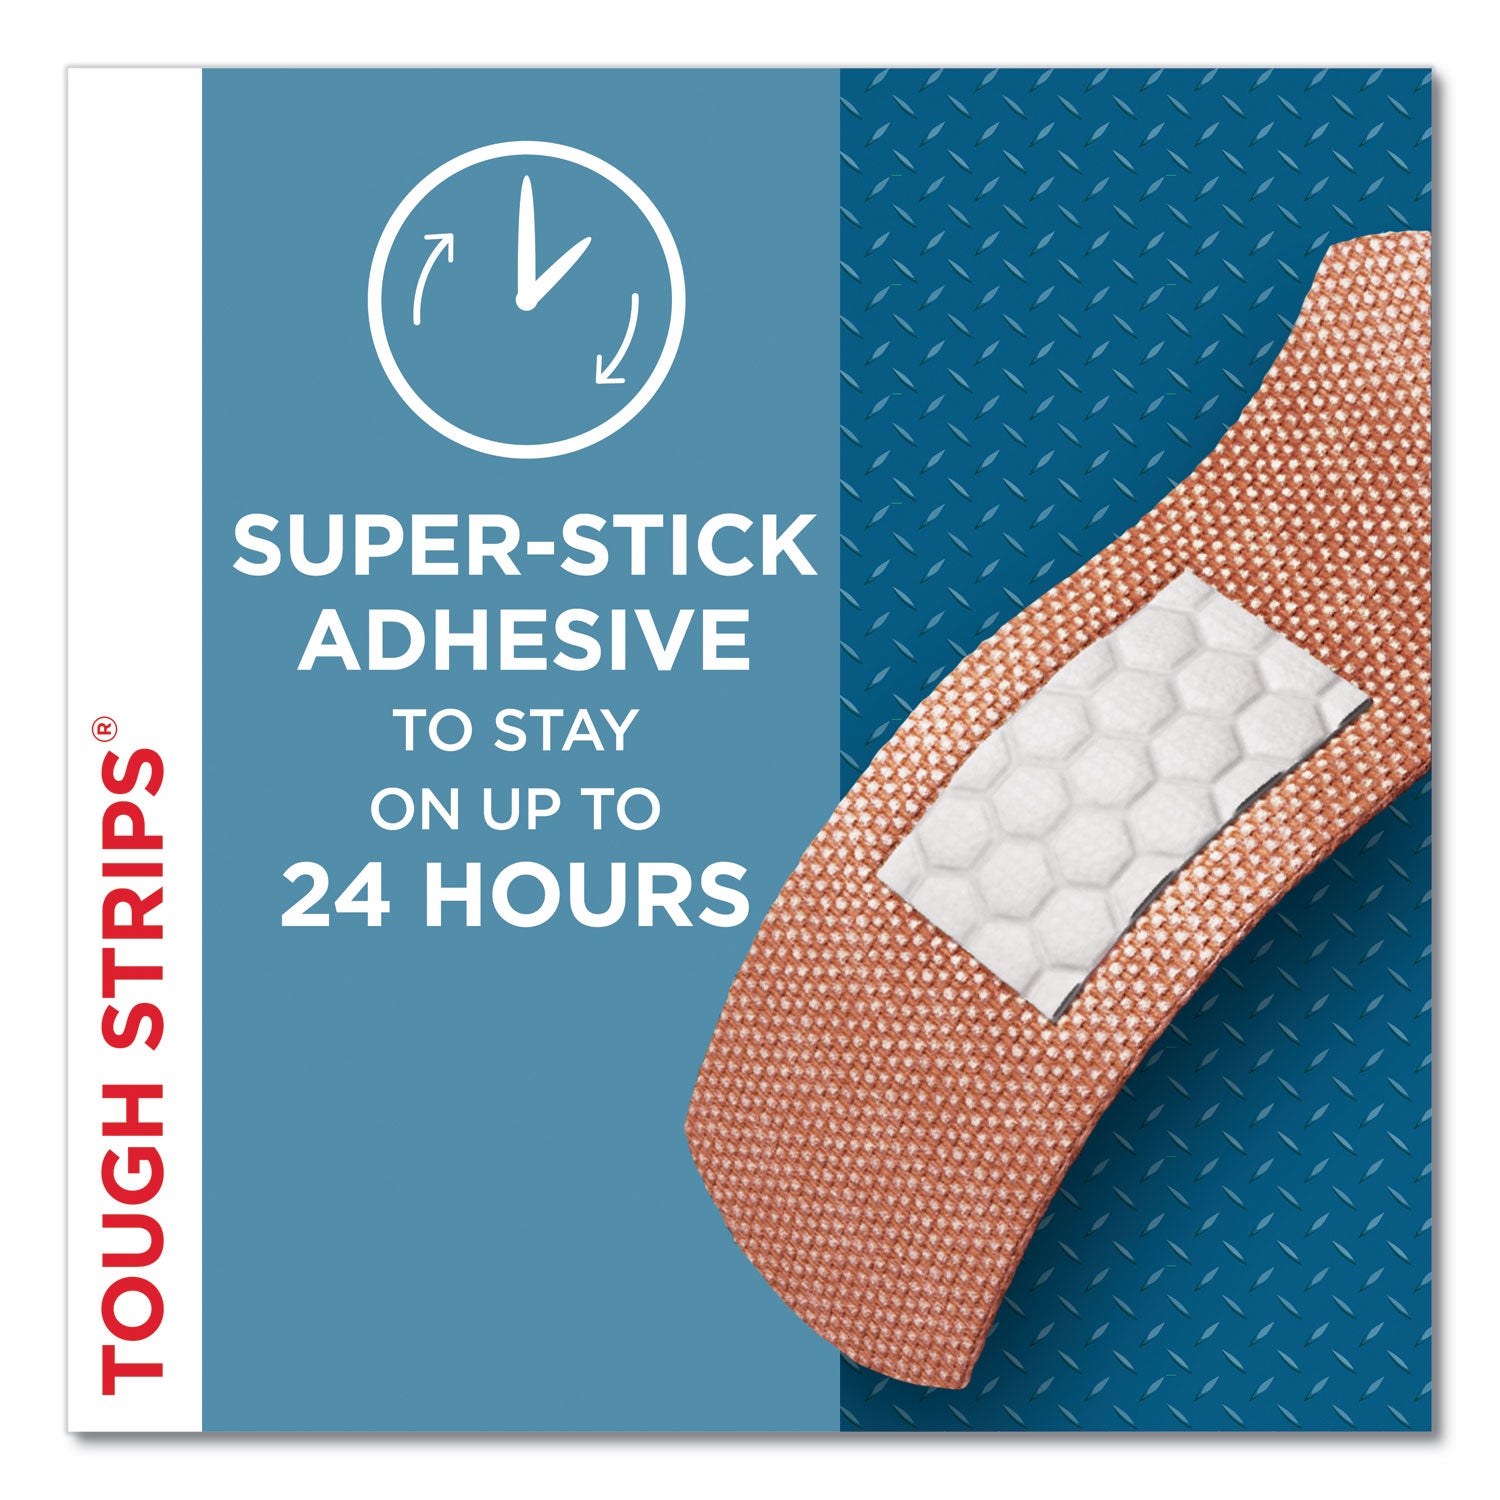 Flexible Fabric Adhesive Tough Strip Bandages, 1 x 4, 20/Box - 